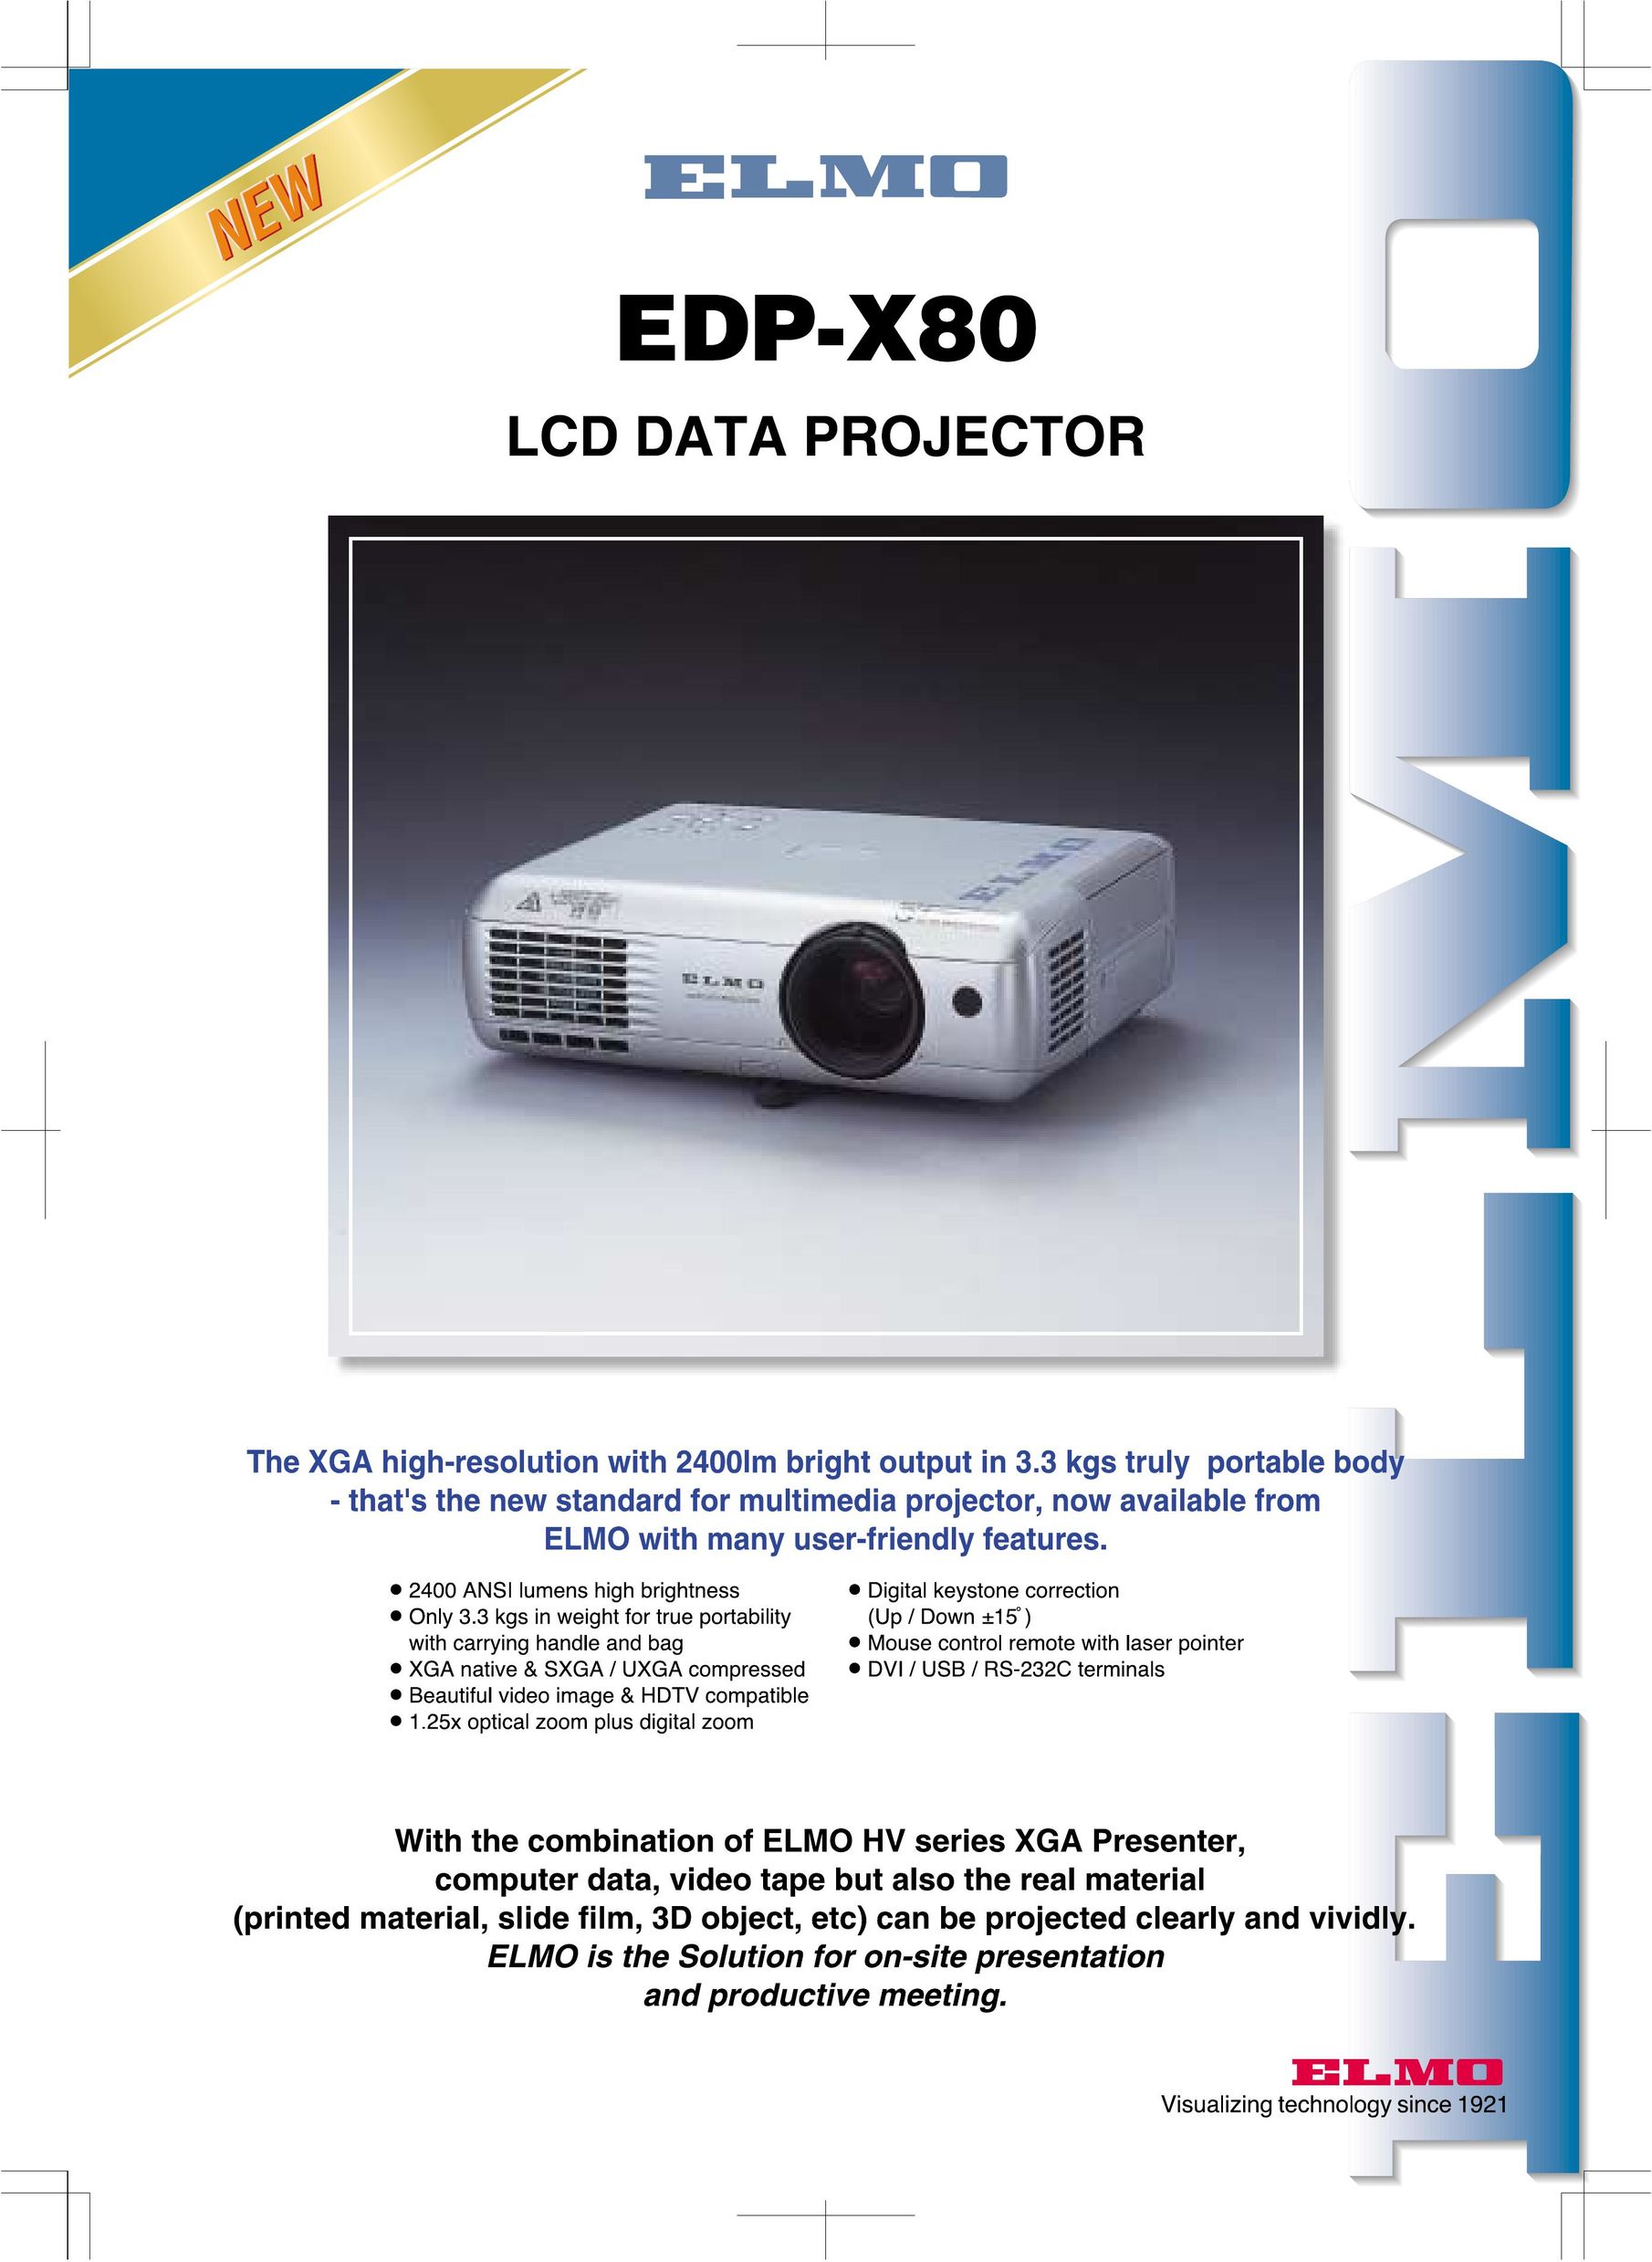 Elmo EDP-X80A4 Projector User Manual